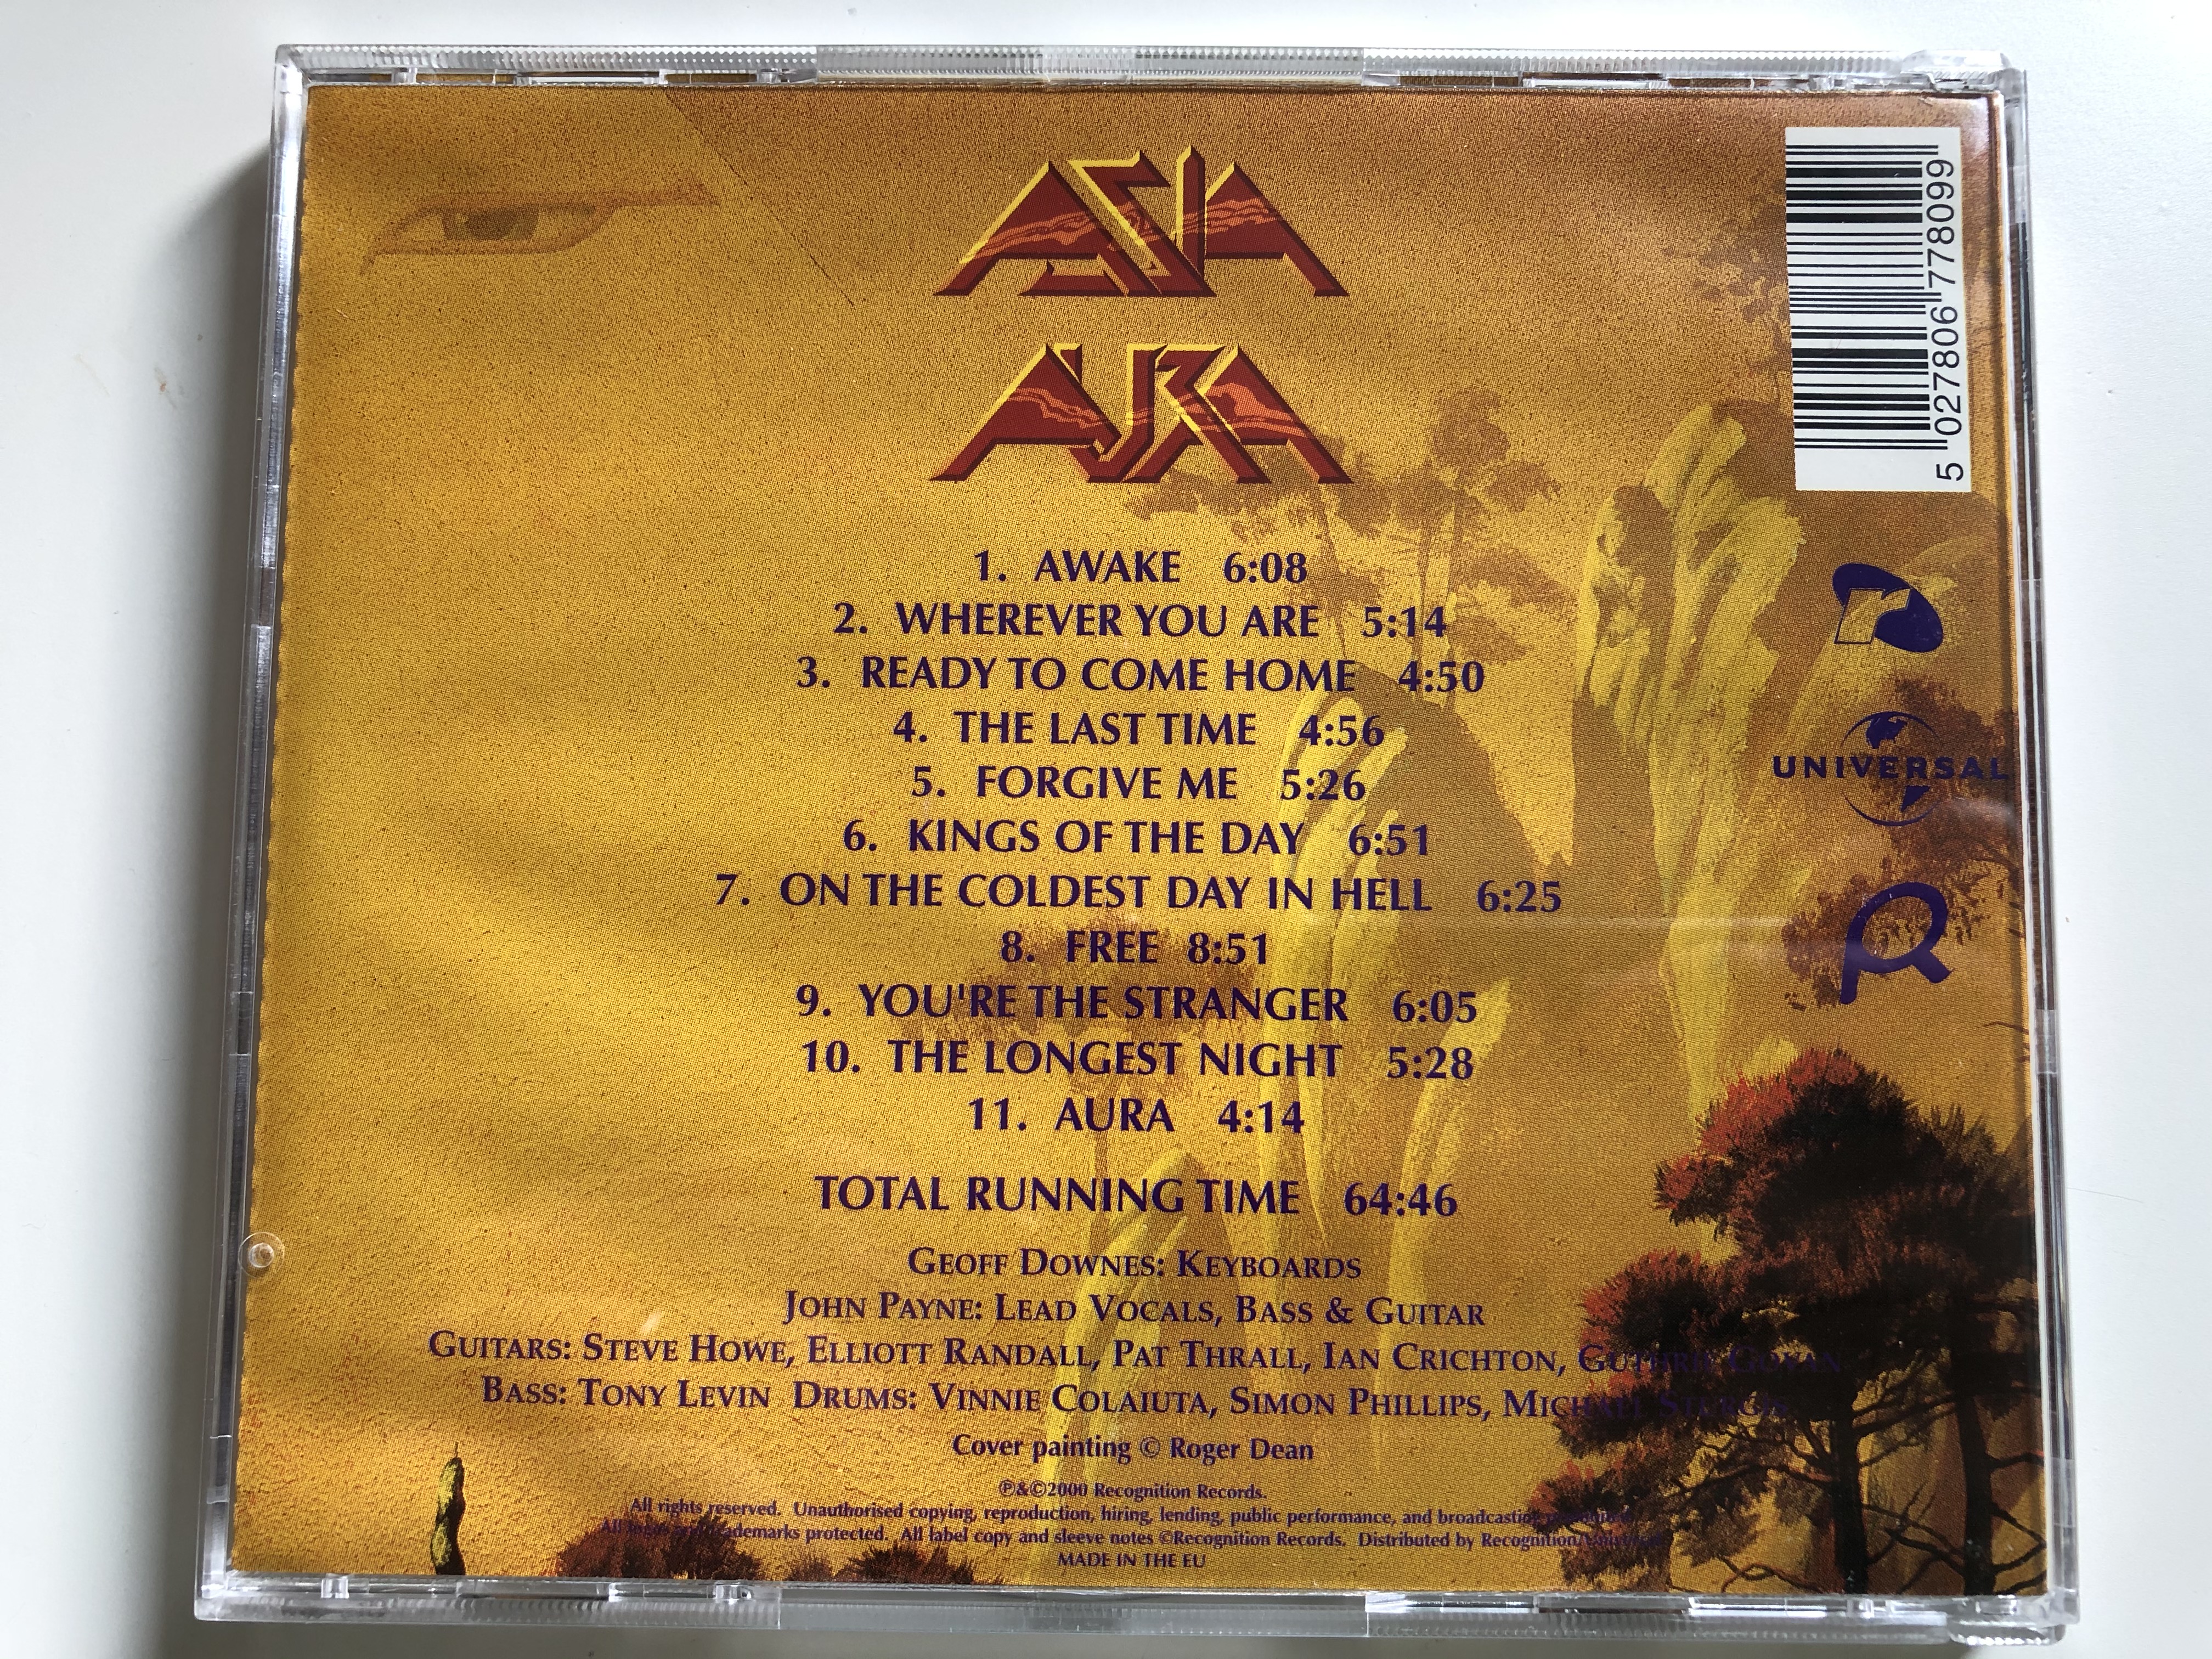 asia-aura-recognition-records-audio-cd-2000-cdrec501-9-.jpg